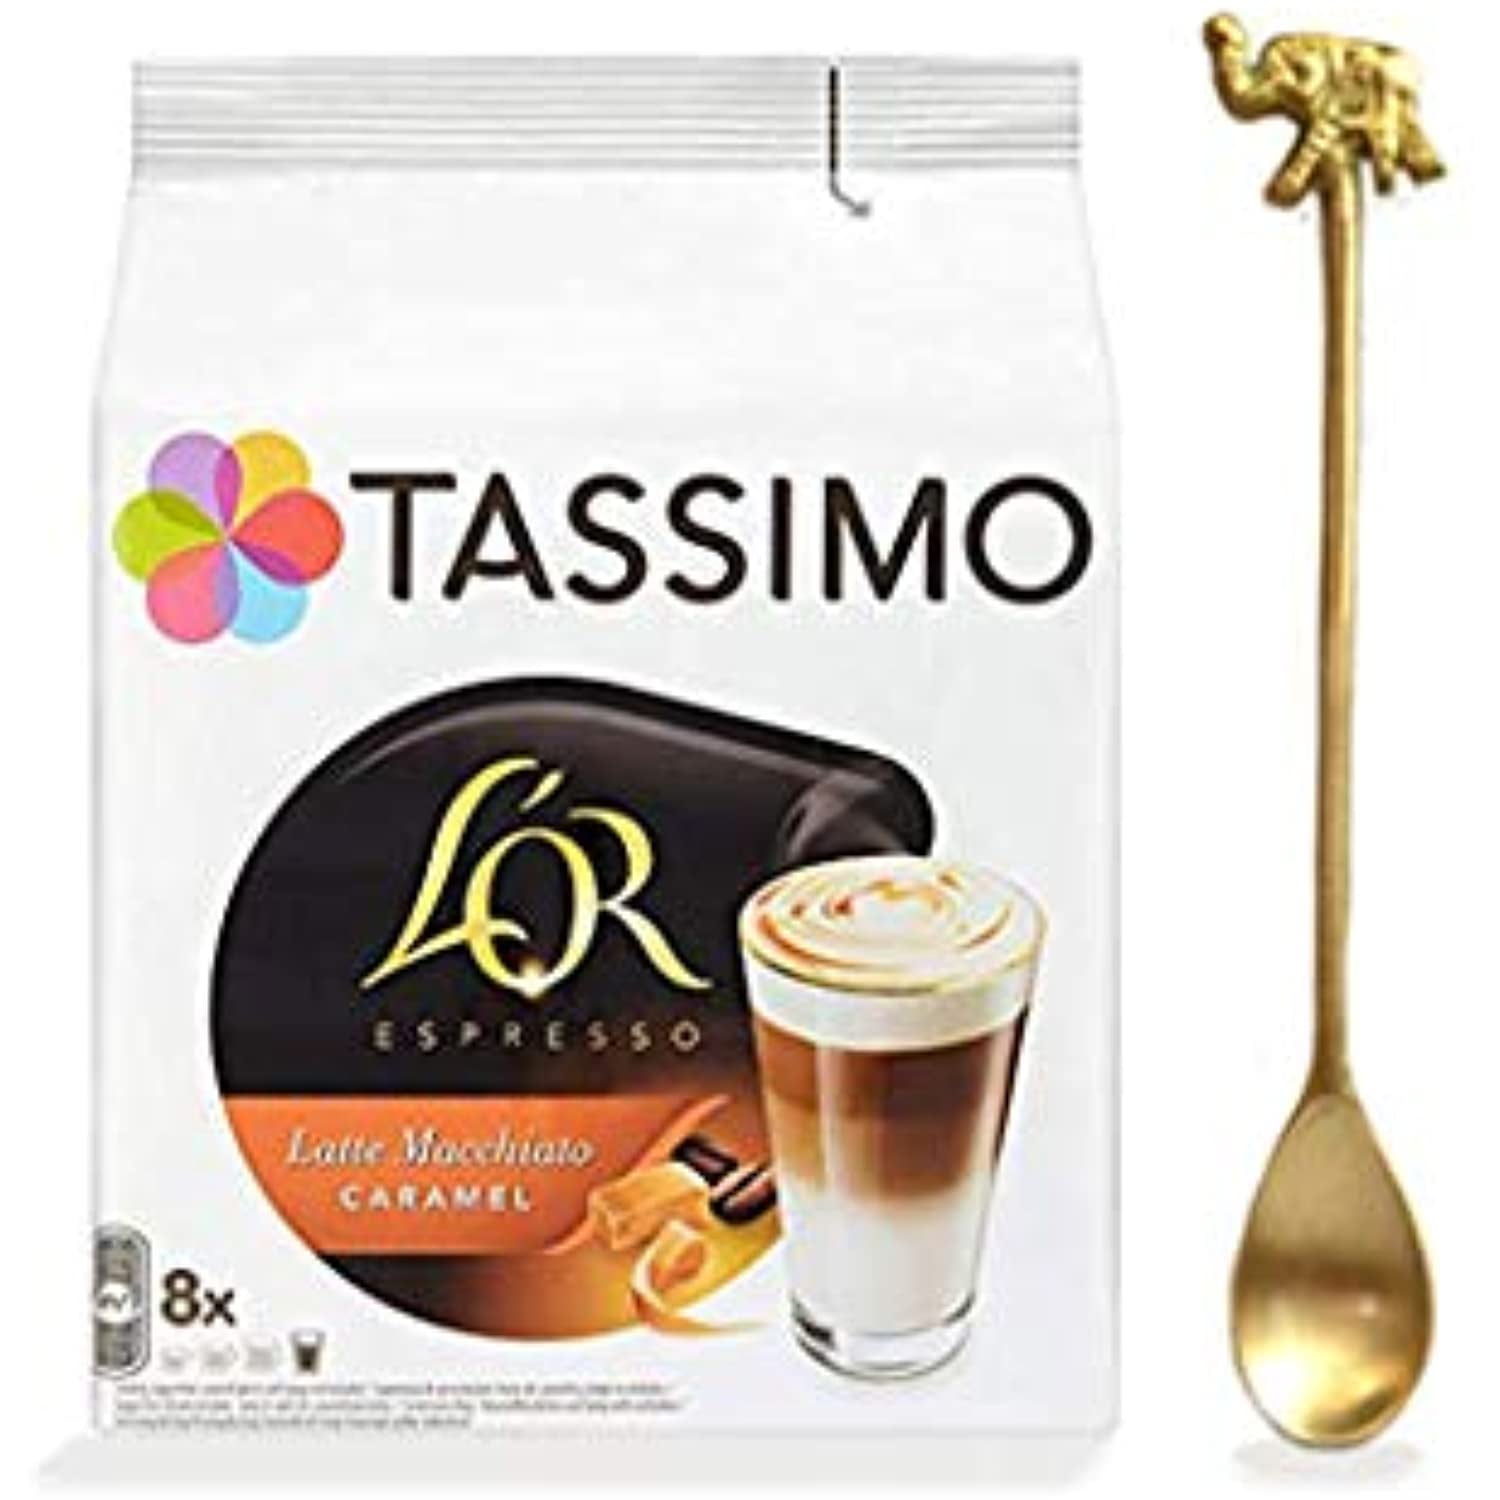 TASSIMO Café dosettes Maxwell House Latte Macchiato Caramel - Lot